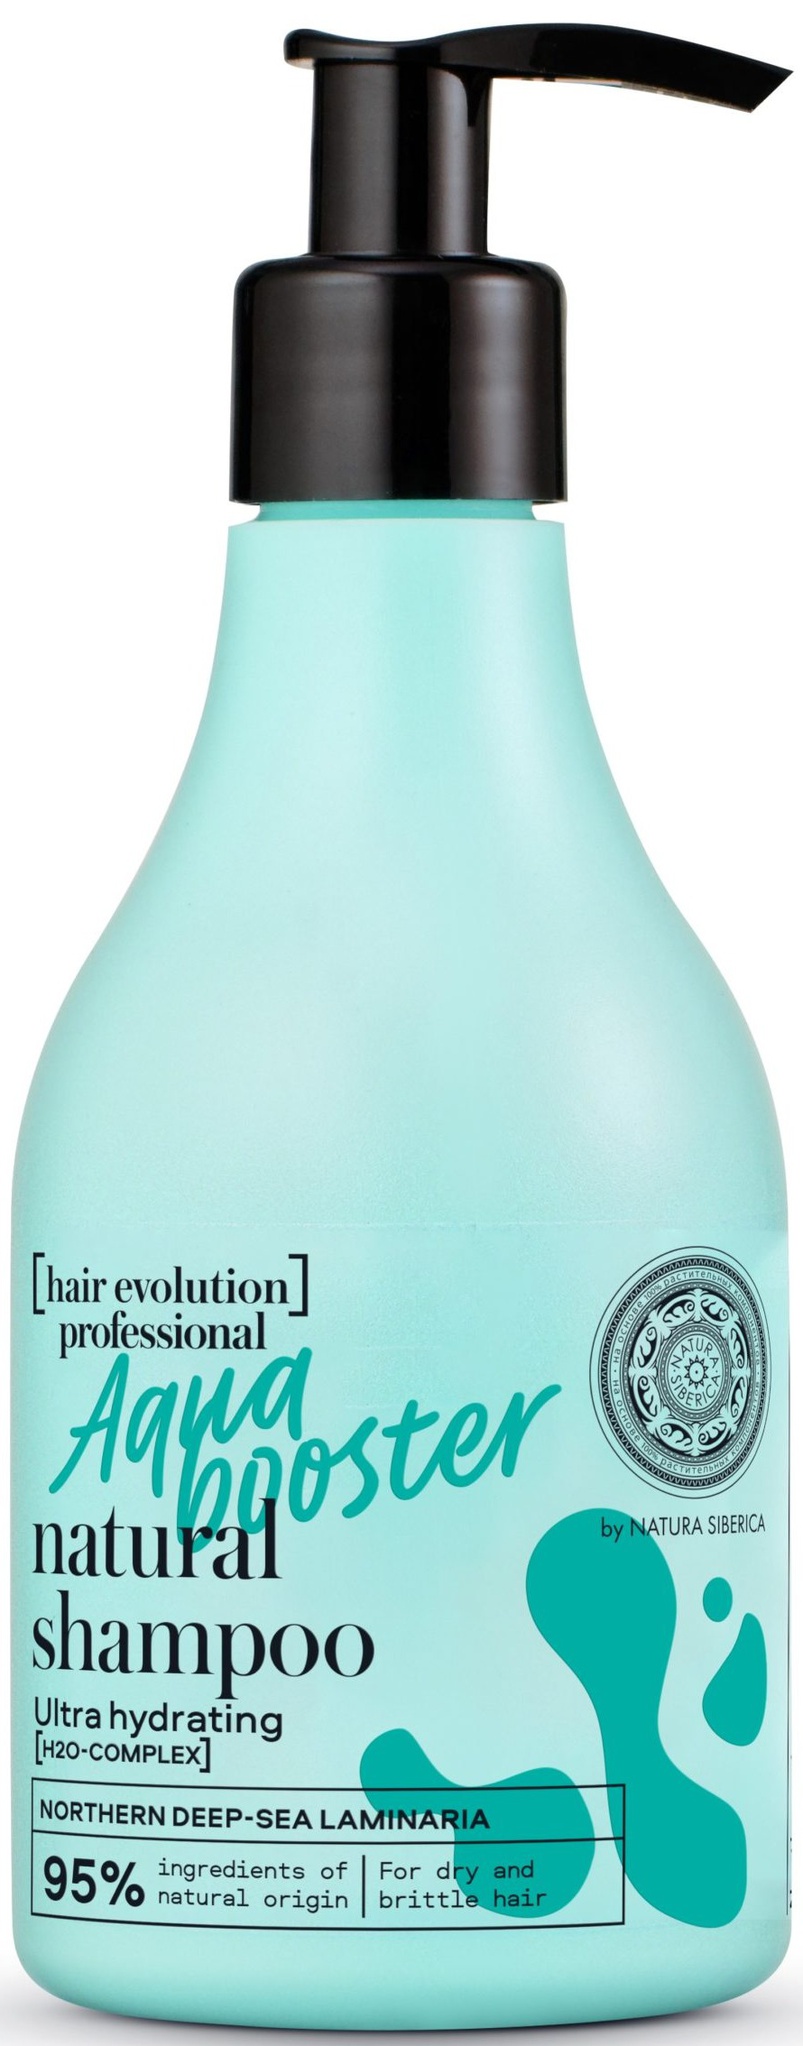 Natura Siberica Hair Evolution Aqua Booster Natural Shampoo